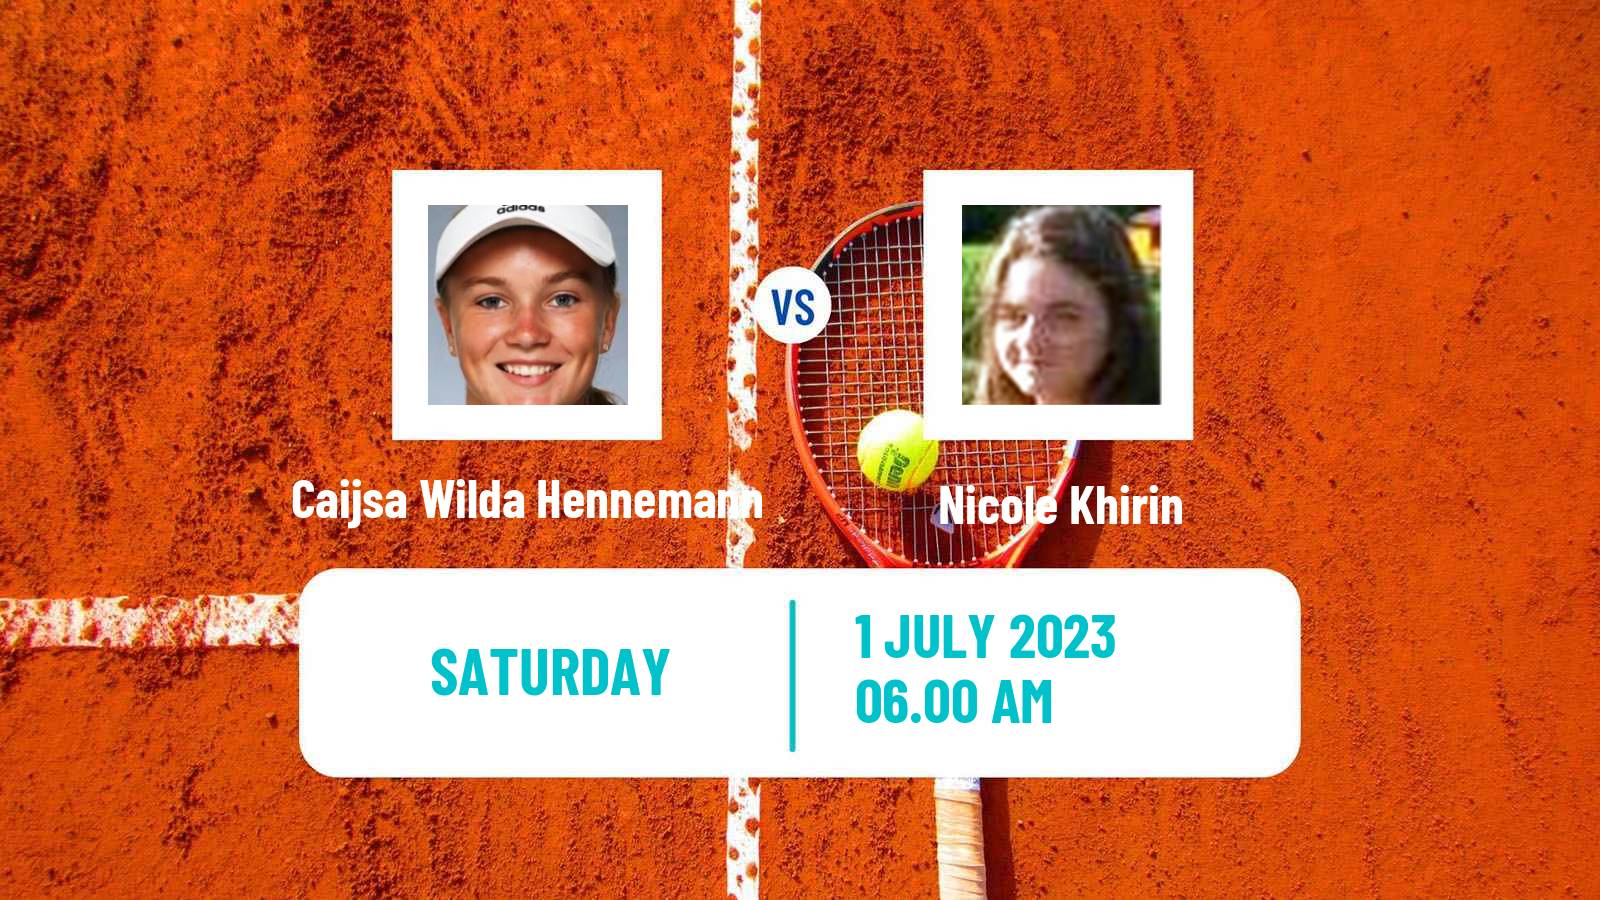 Tennis ITF W15 Alkmaar Women Caijsa Wilda Hennemann - Nicole Khirin